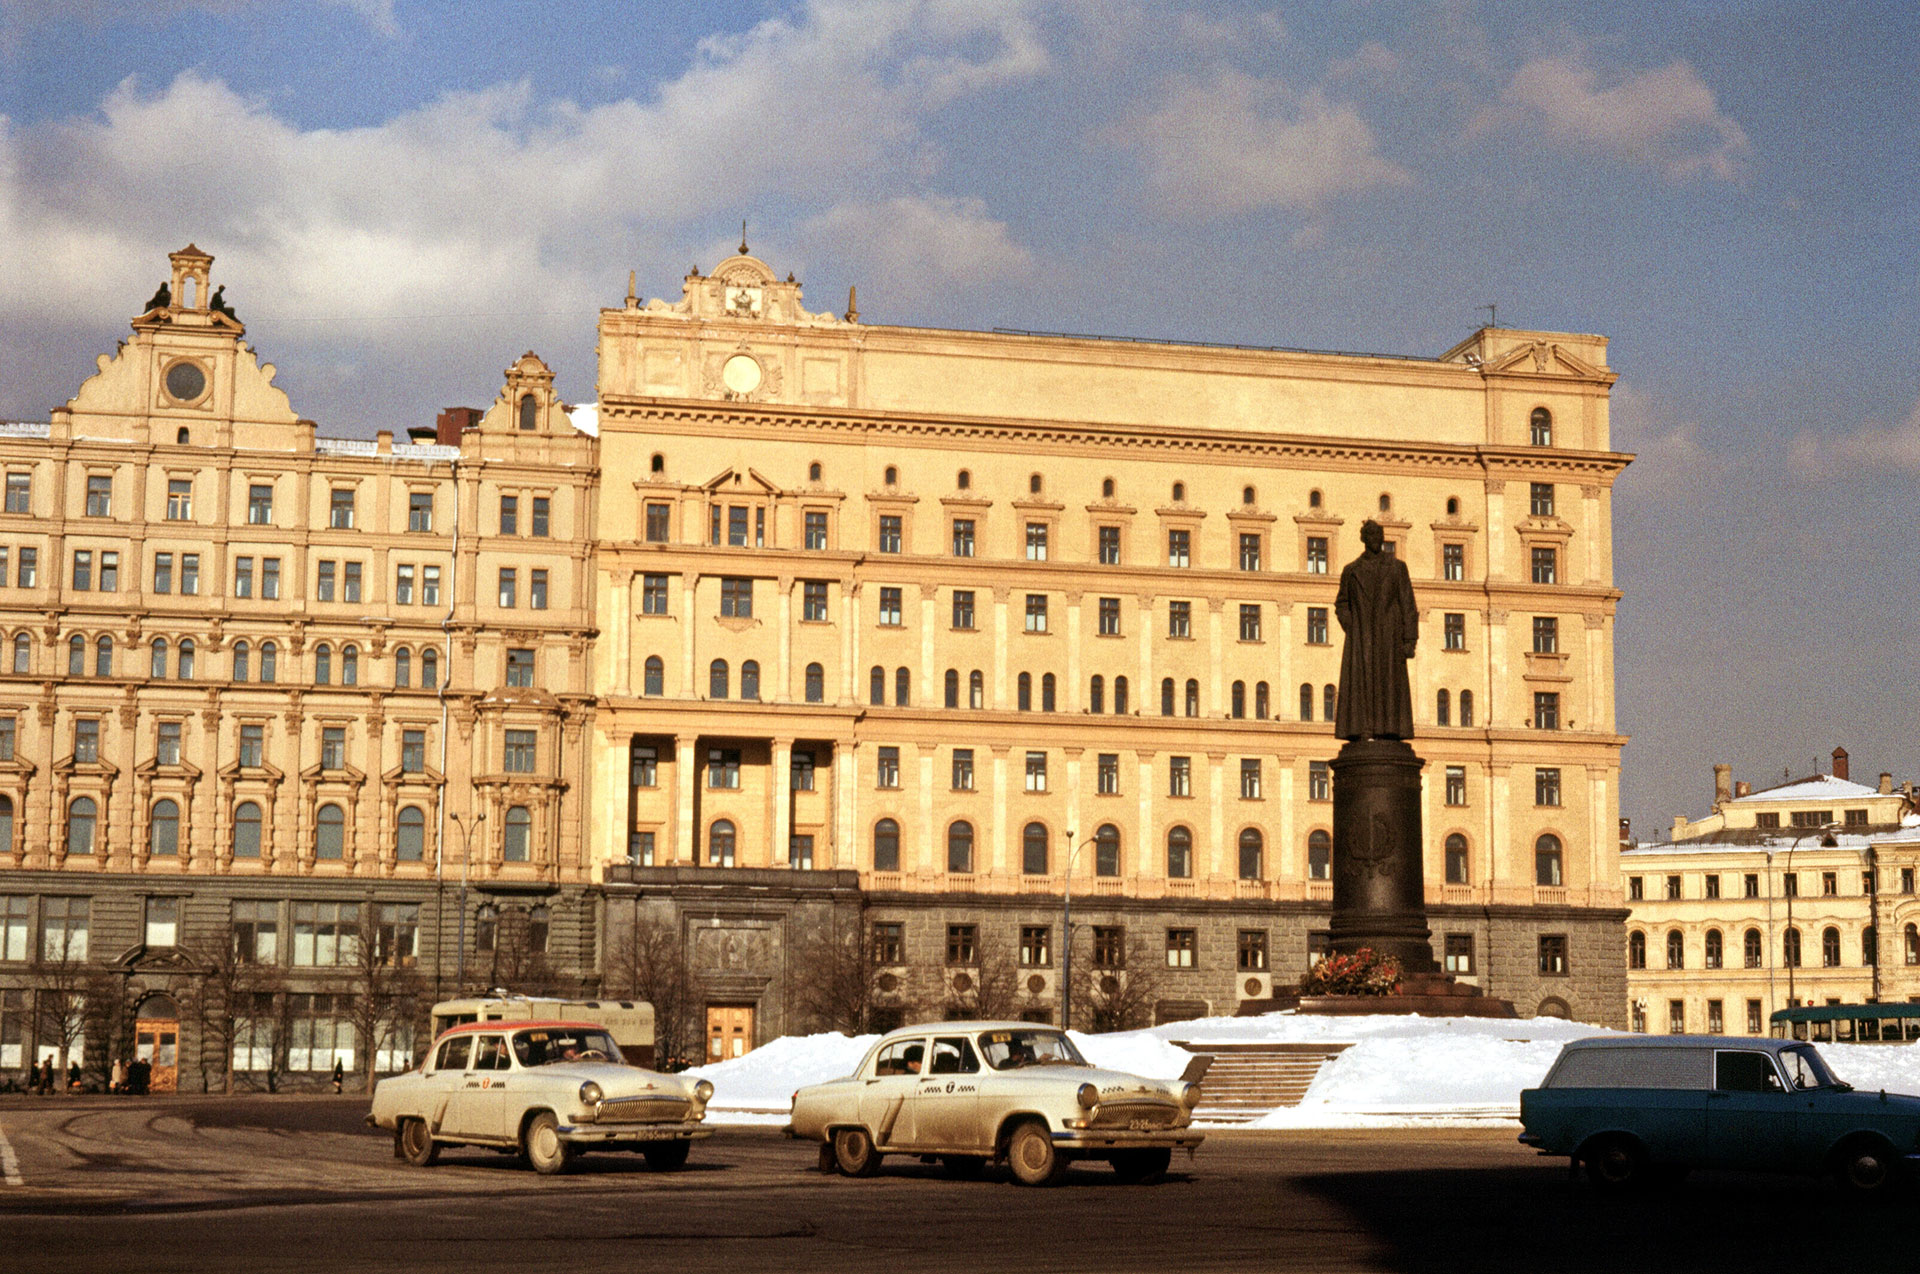 Lubyanka KGB headquarters